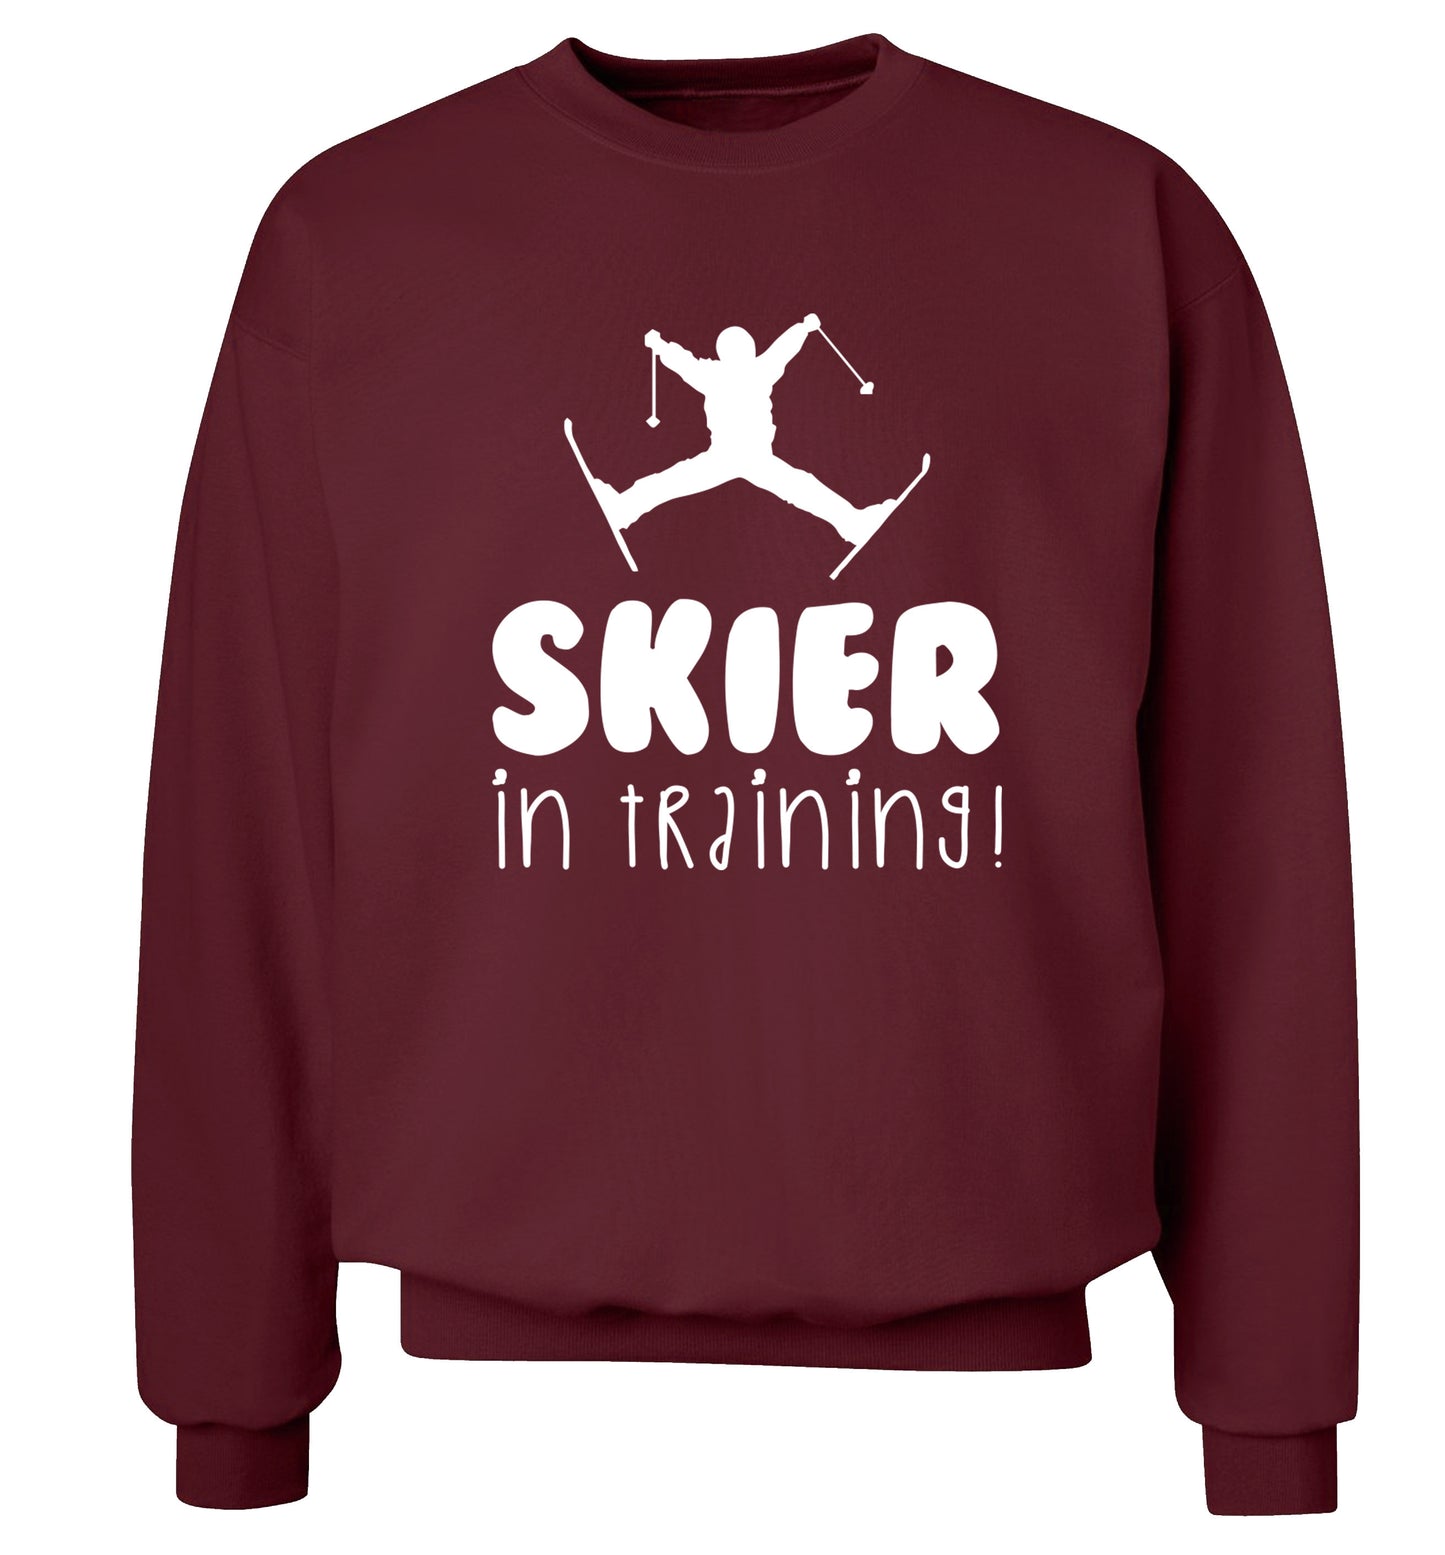 Skier in training Adult's unisex maroon Sweater 2XL